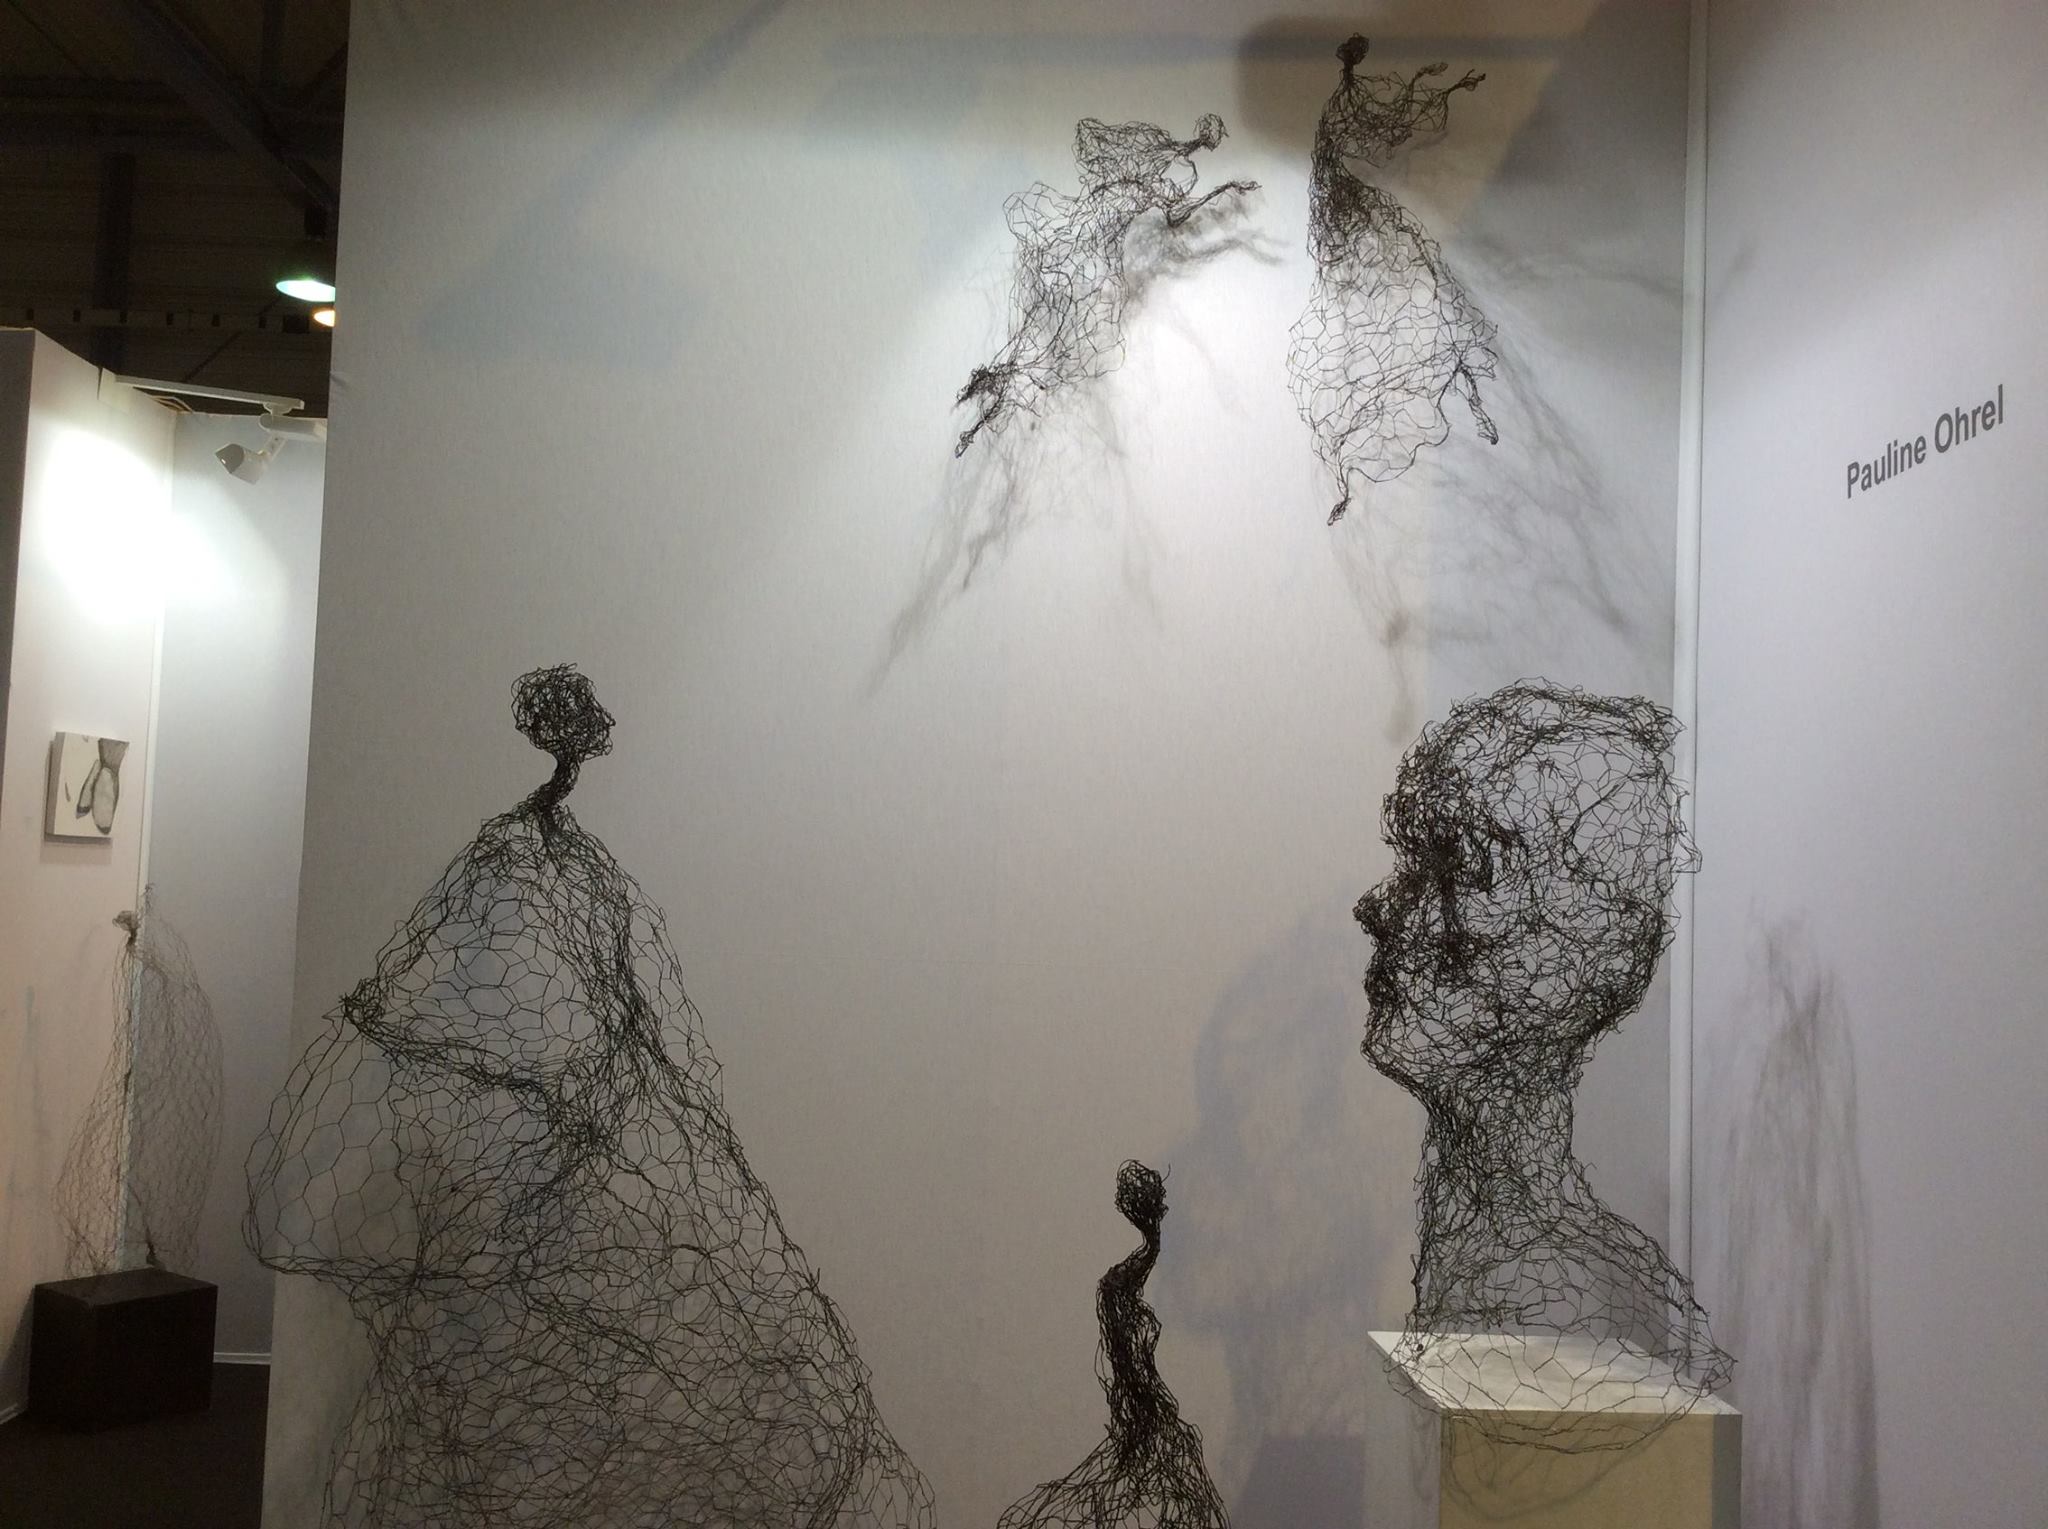 Pauline Ohrel Sculptor – wire sculptures